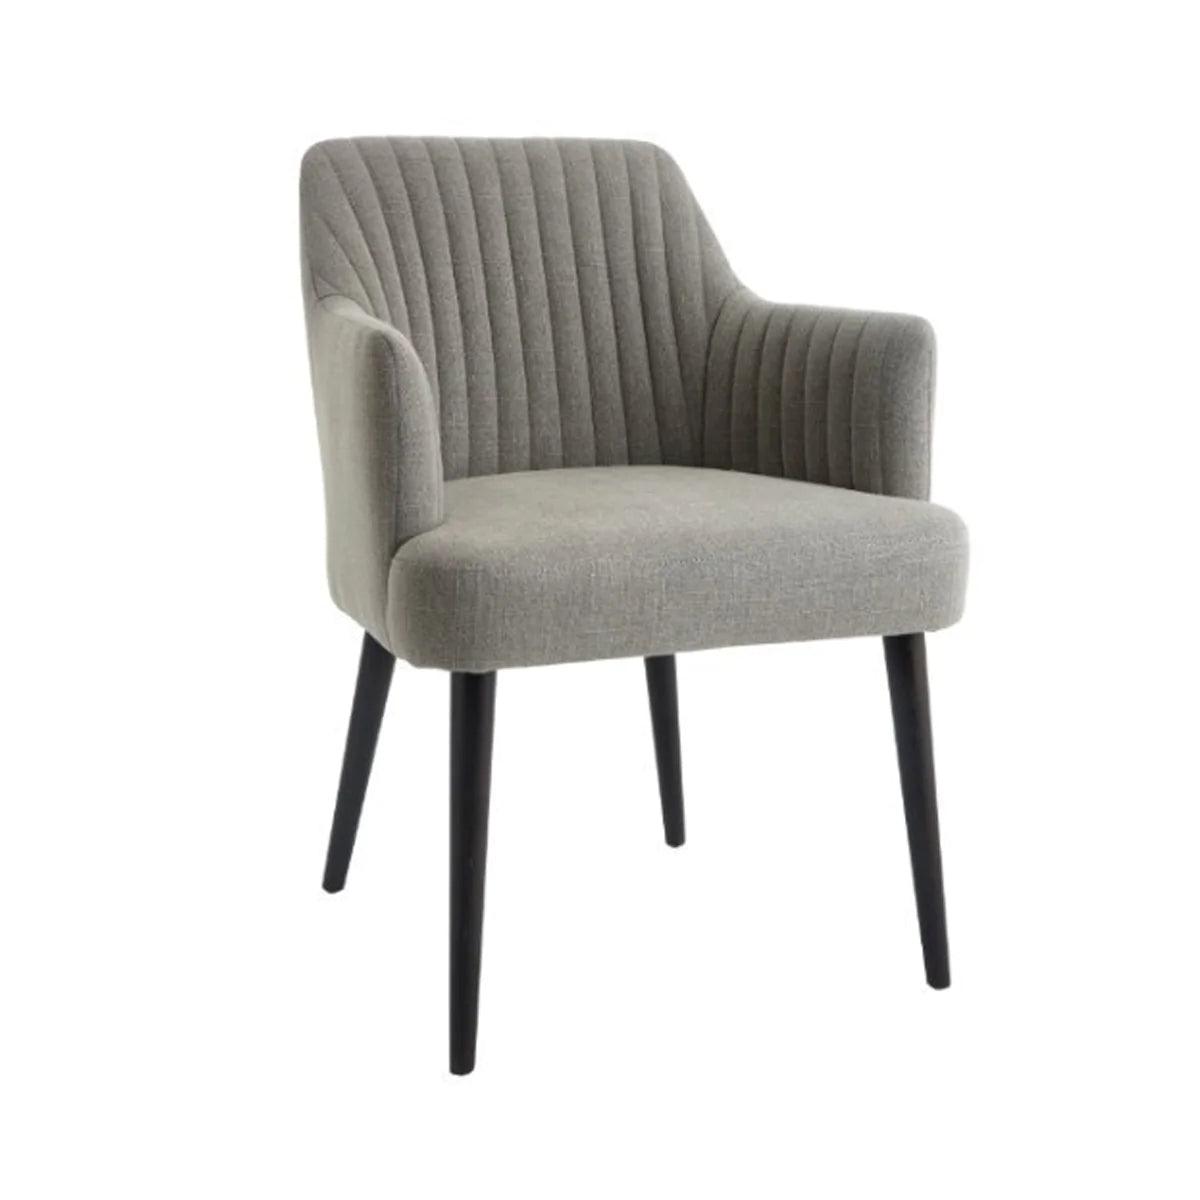 RV Astley Blisco Chair In Grey Linen-Esme Furnishings